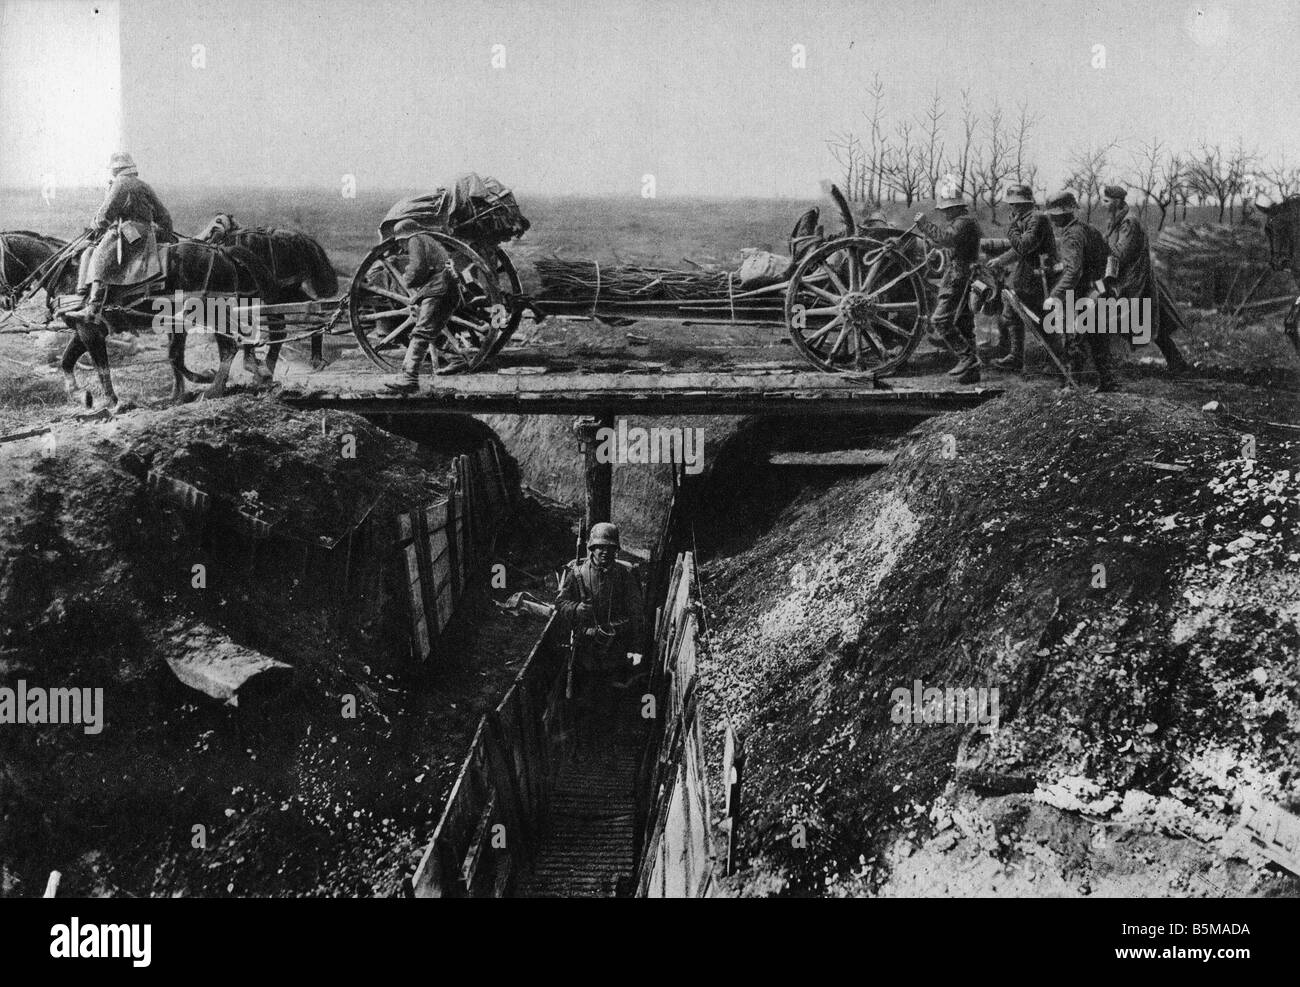 2 G55 W1 1917 23 Advancing German artillery World War I History World War I Western Front German artillerymen advance over the f Stock Photo